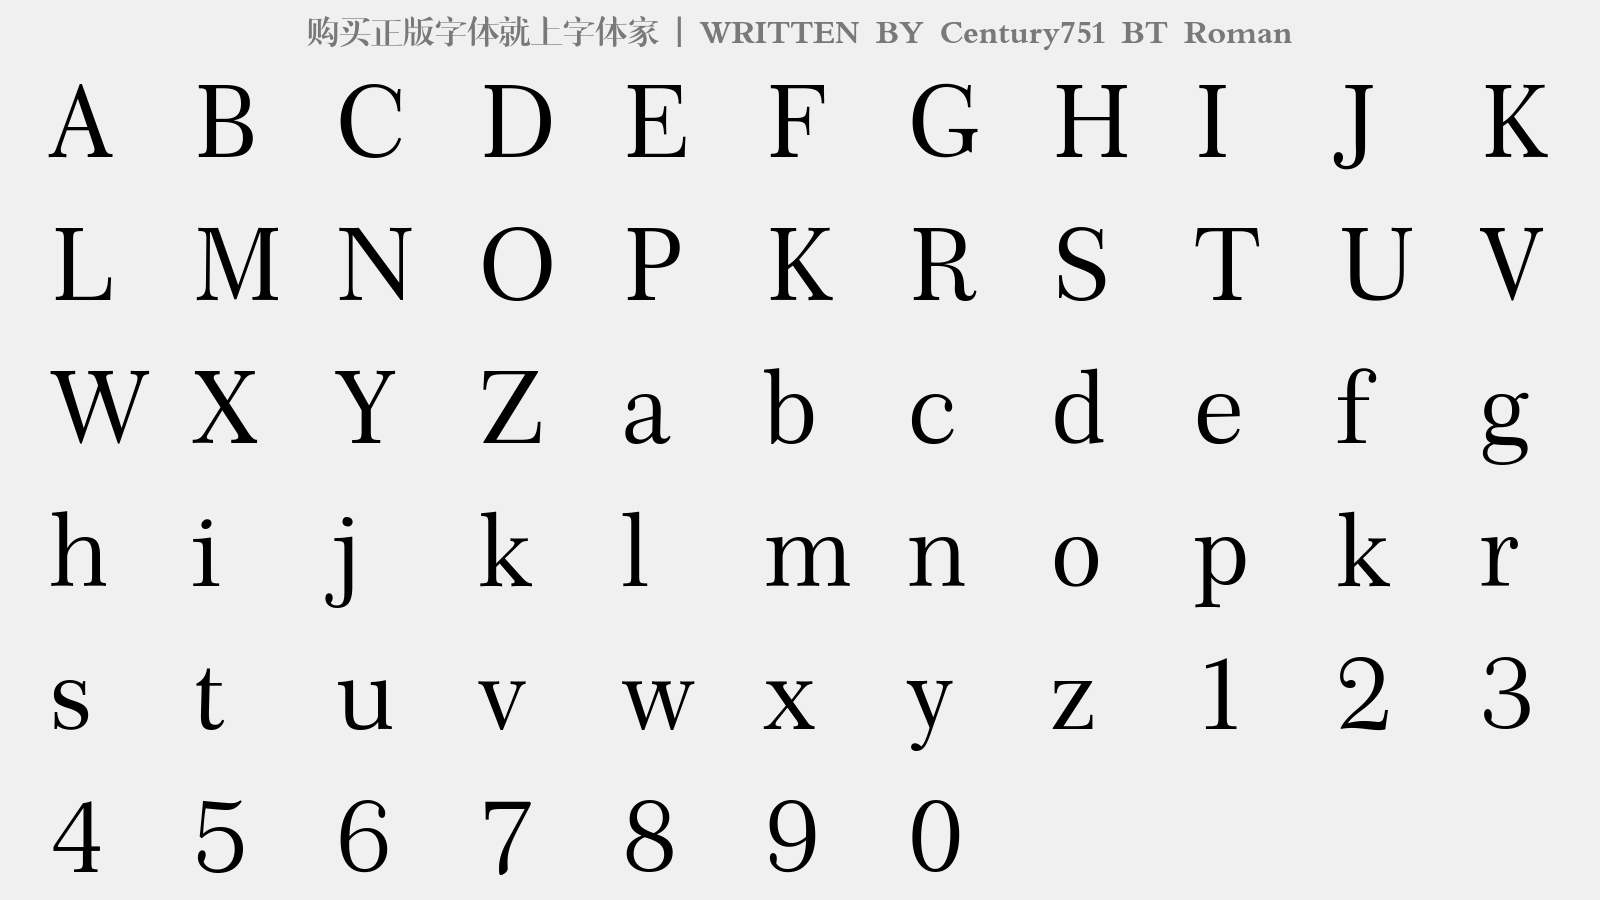 Century751 BT Roman - 大写字母/小写字母/数字